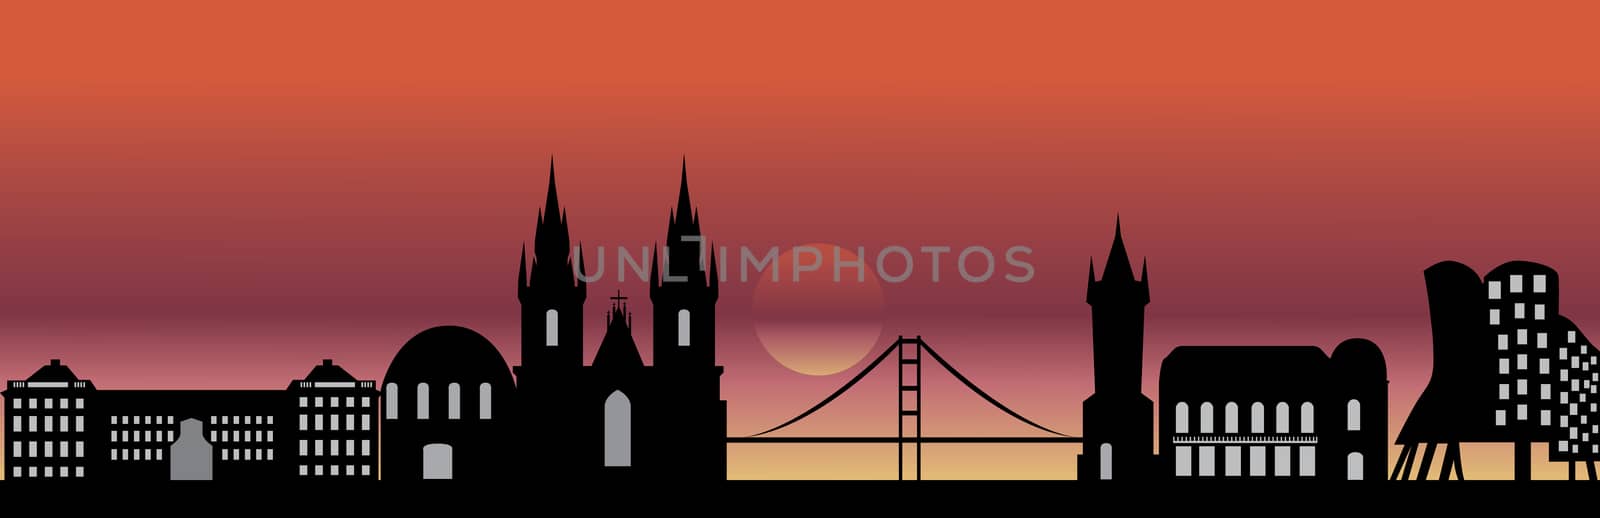 praha skyline by compuinfoto